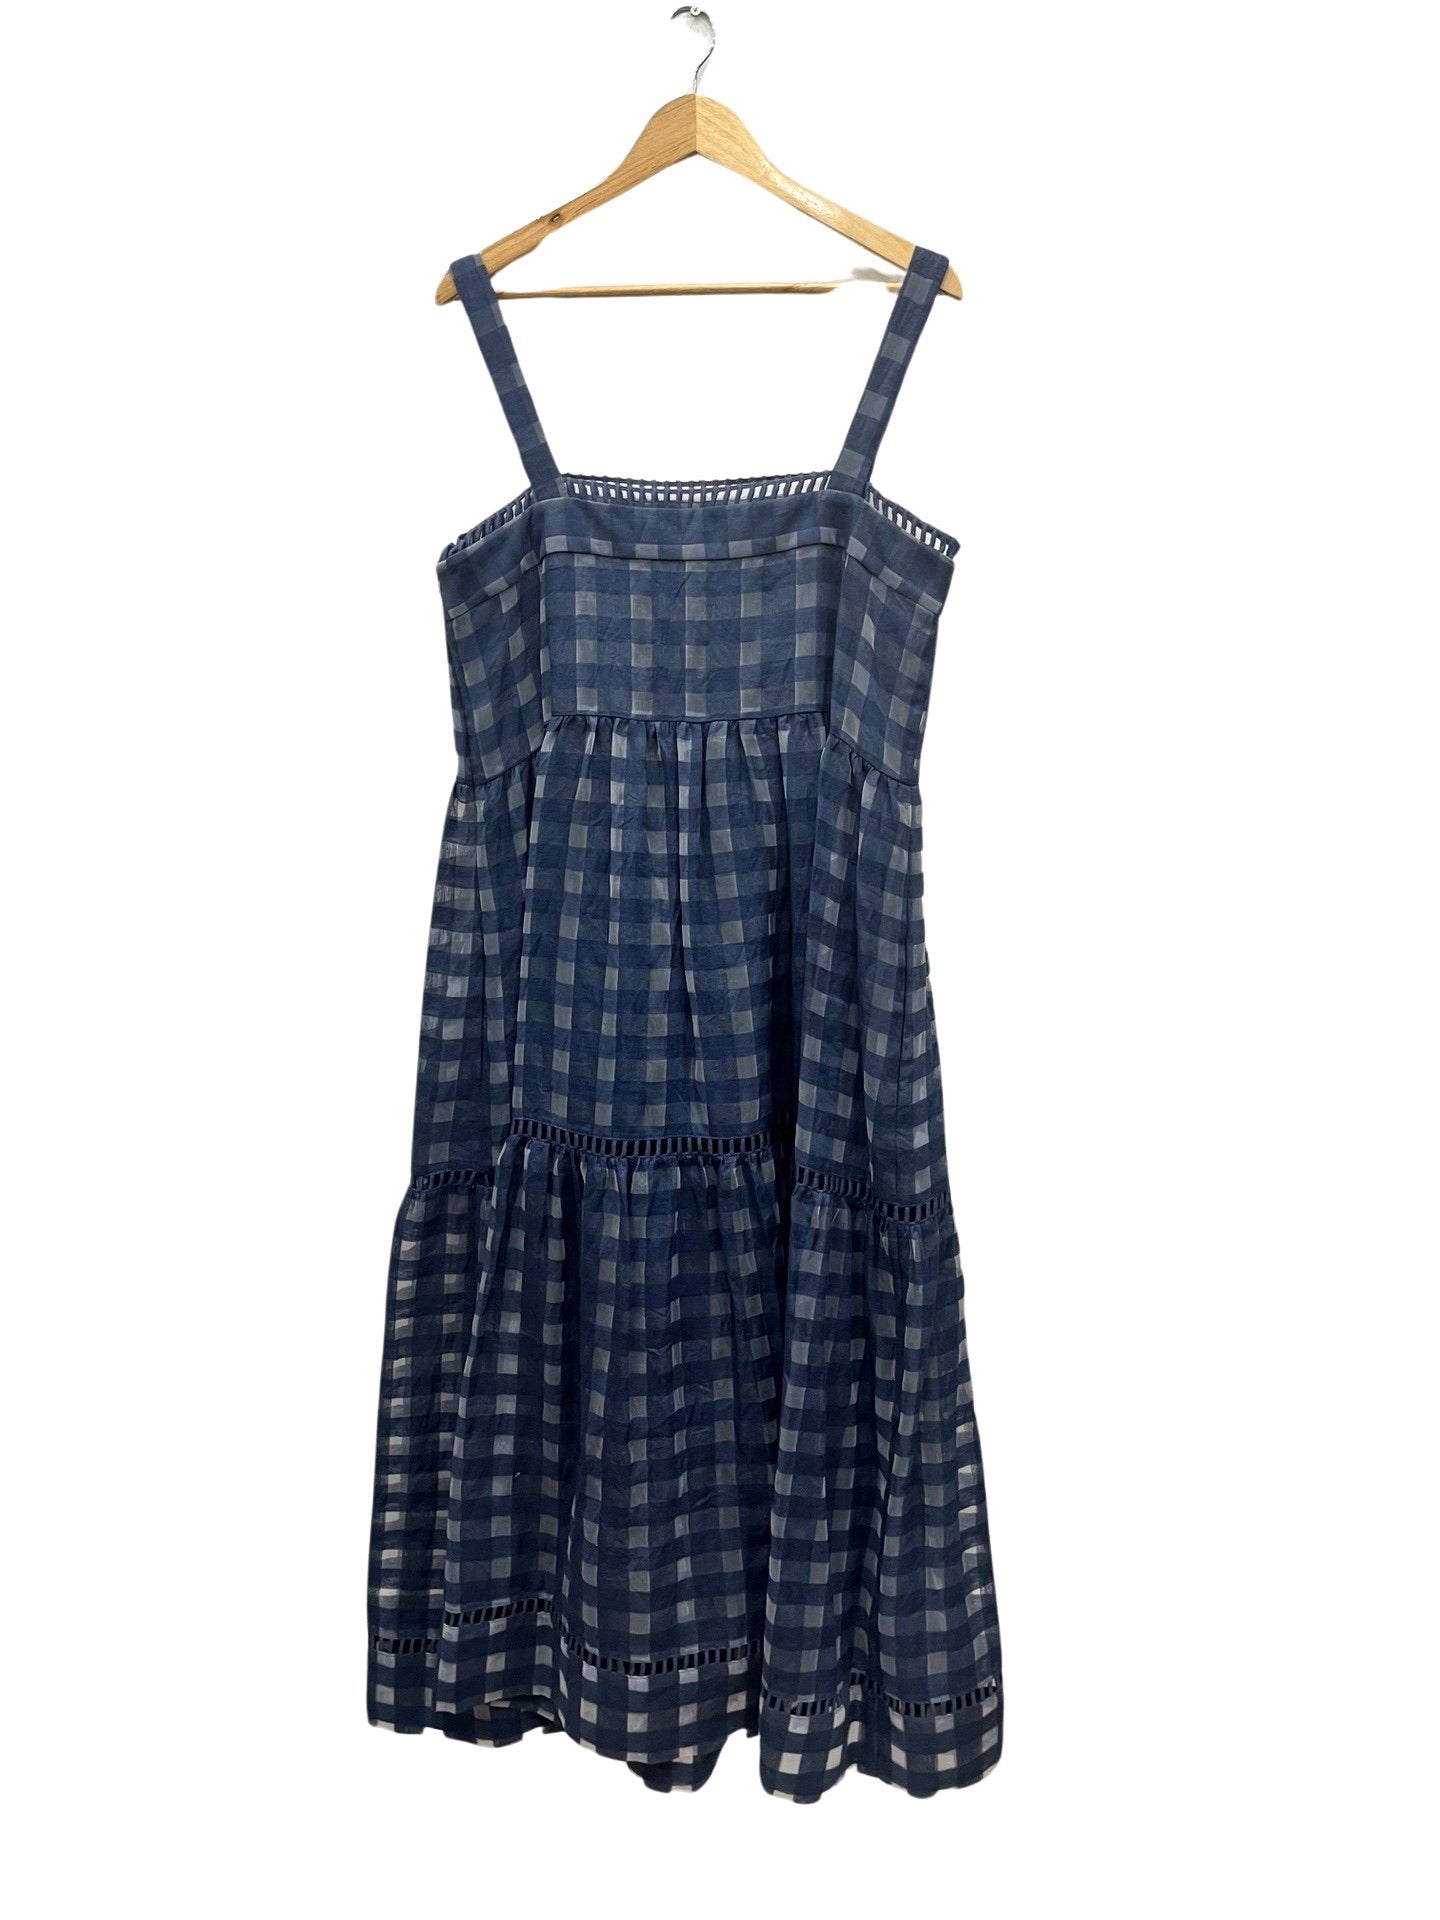 Trelise Cooper Blue/Grey Dress 14 NWT